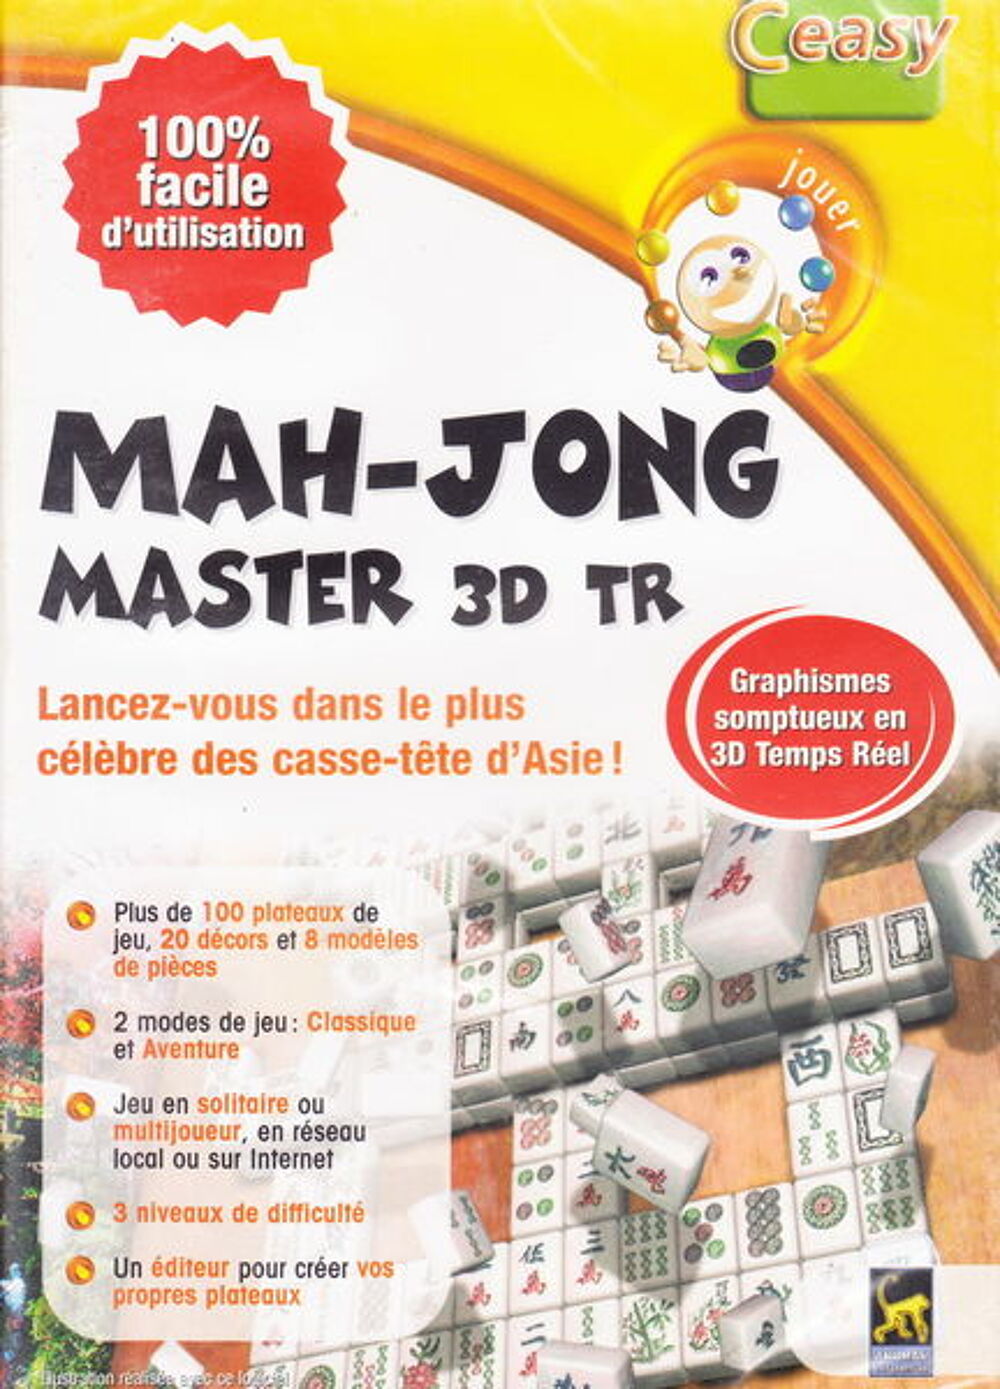 CD jeu PC Mah-Jong master 3D TR NEUF blister
Consoles et jeux vidos